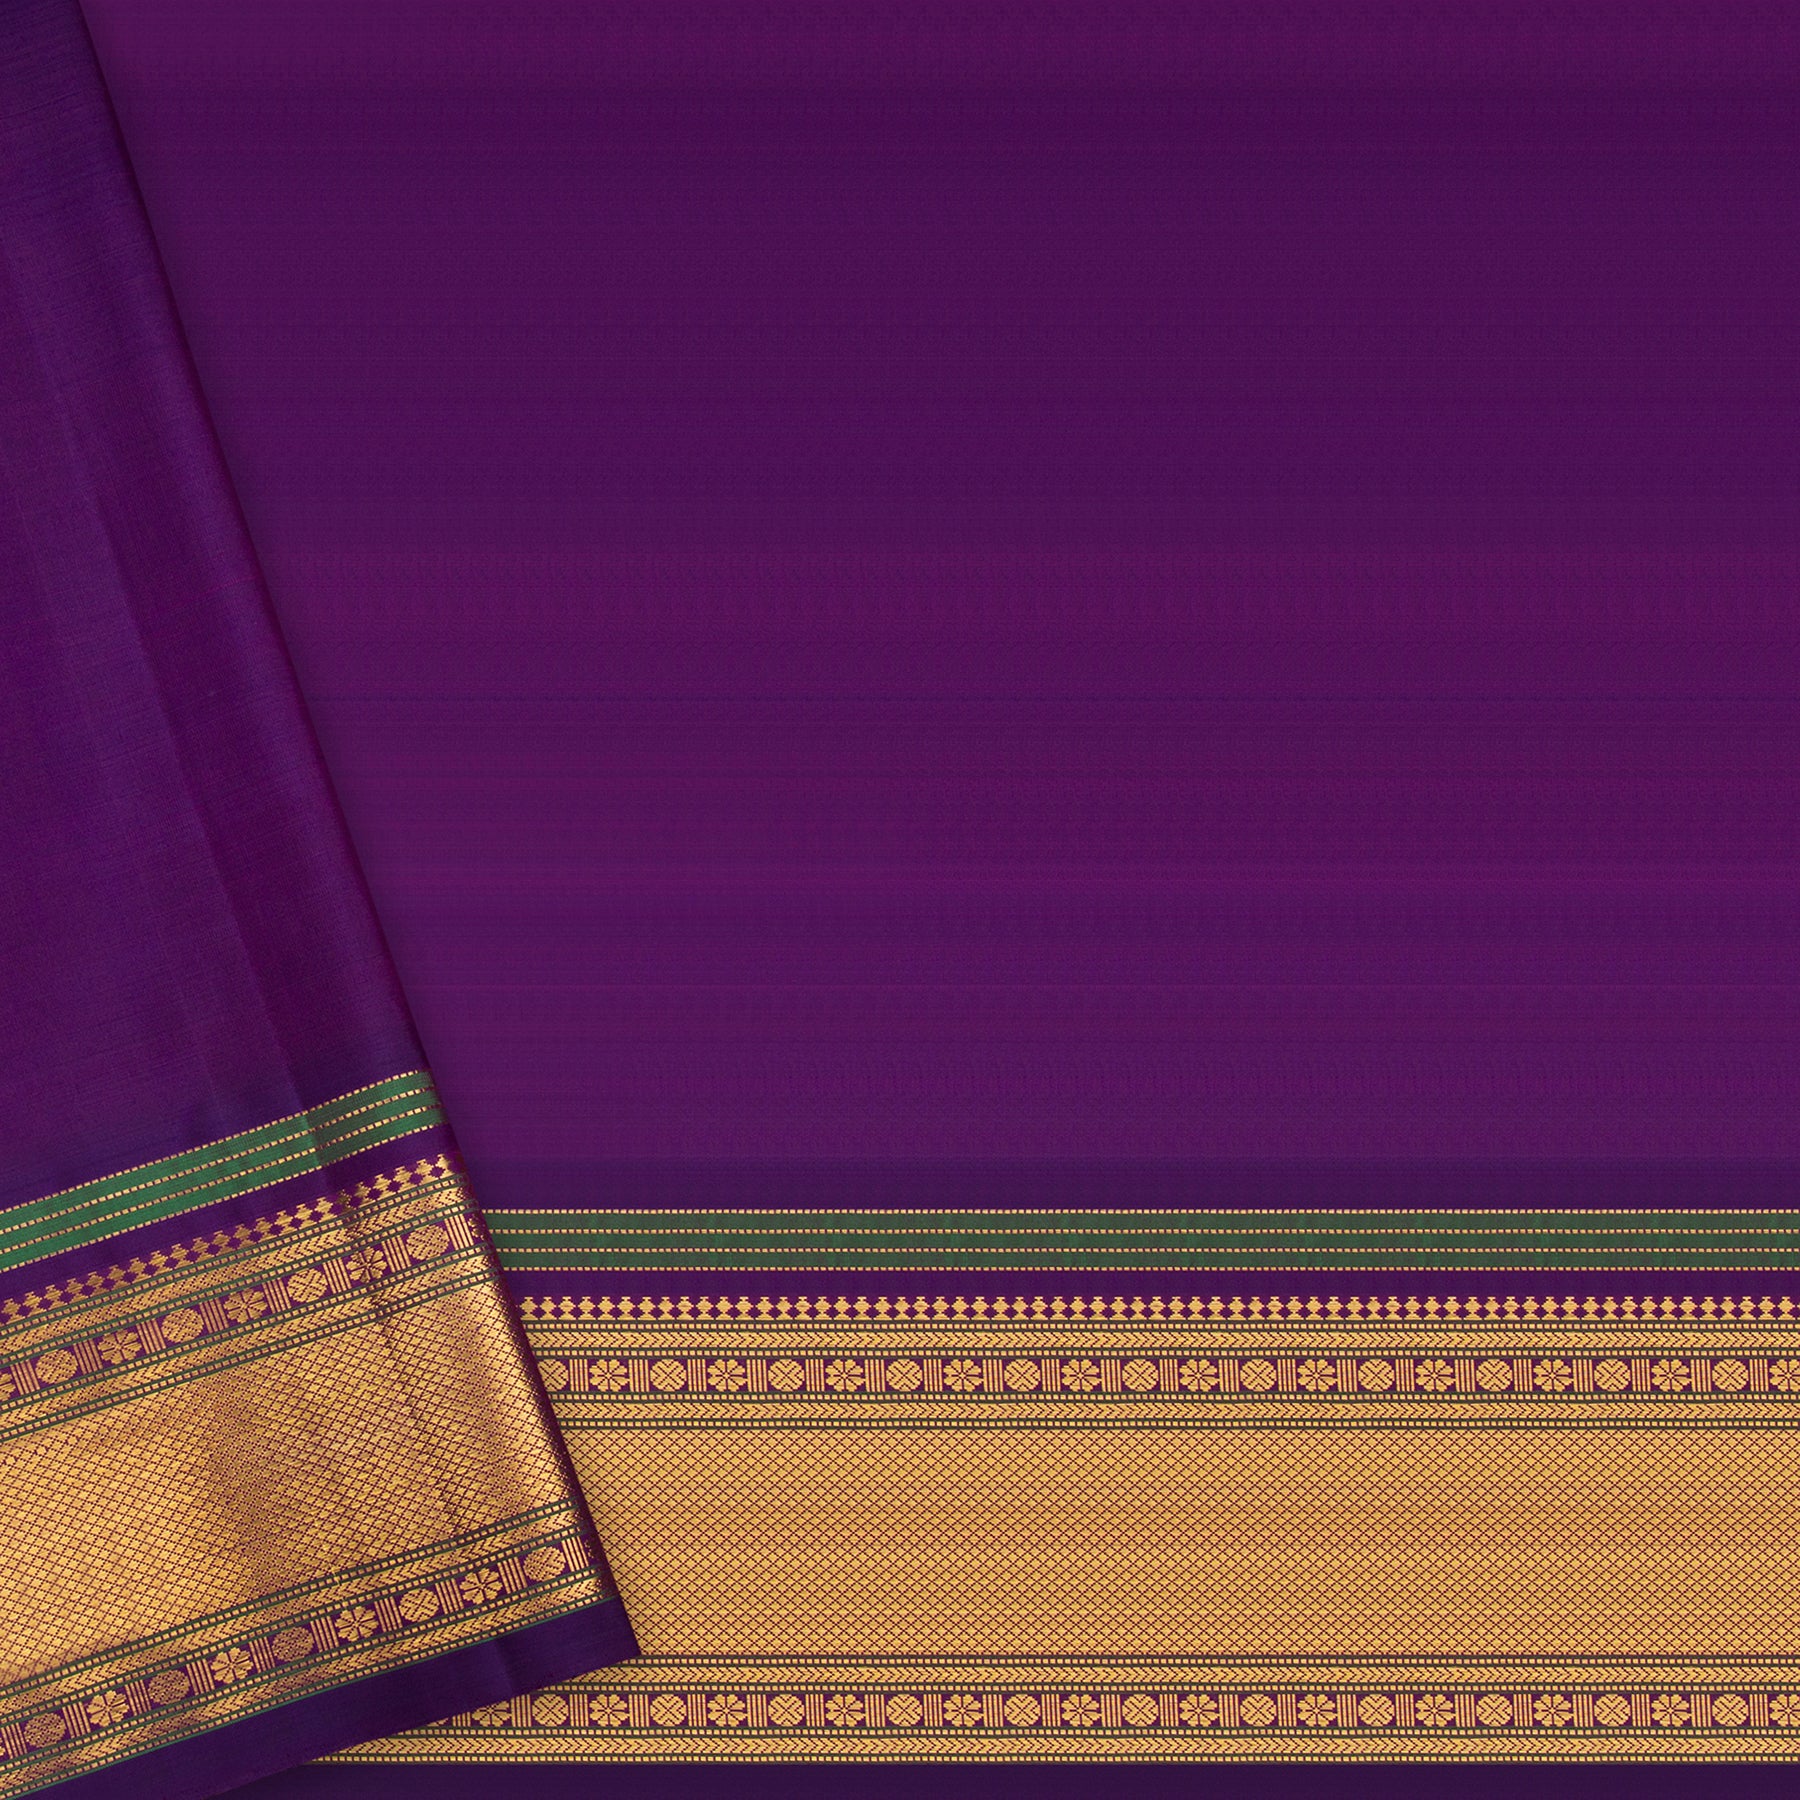 Kanakavalli Kanjivaram Silk Sari 23-041-HS001-03338 - Blouse View